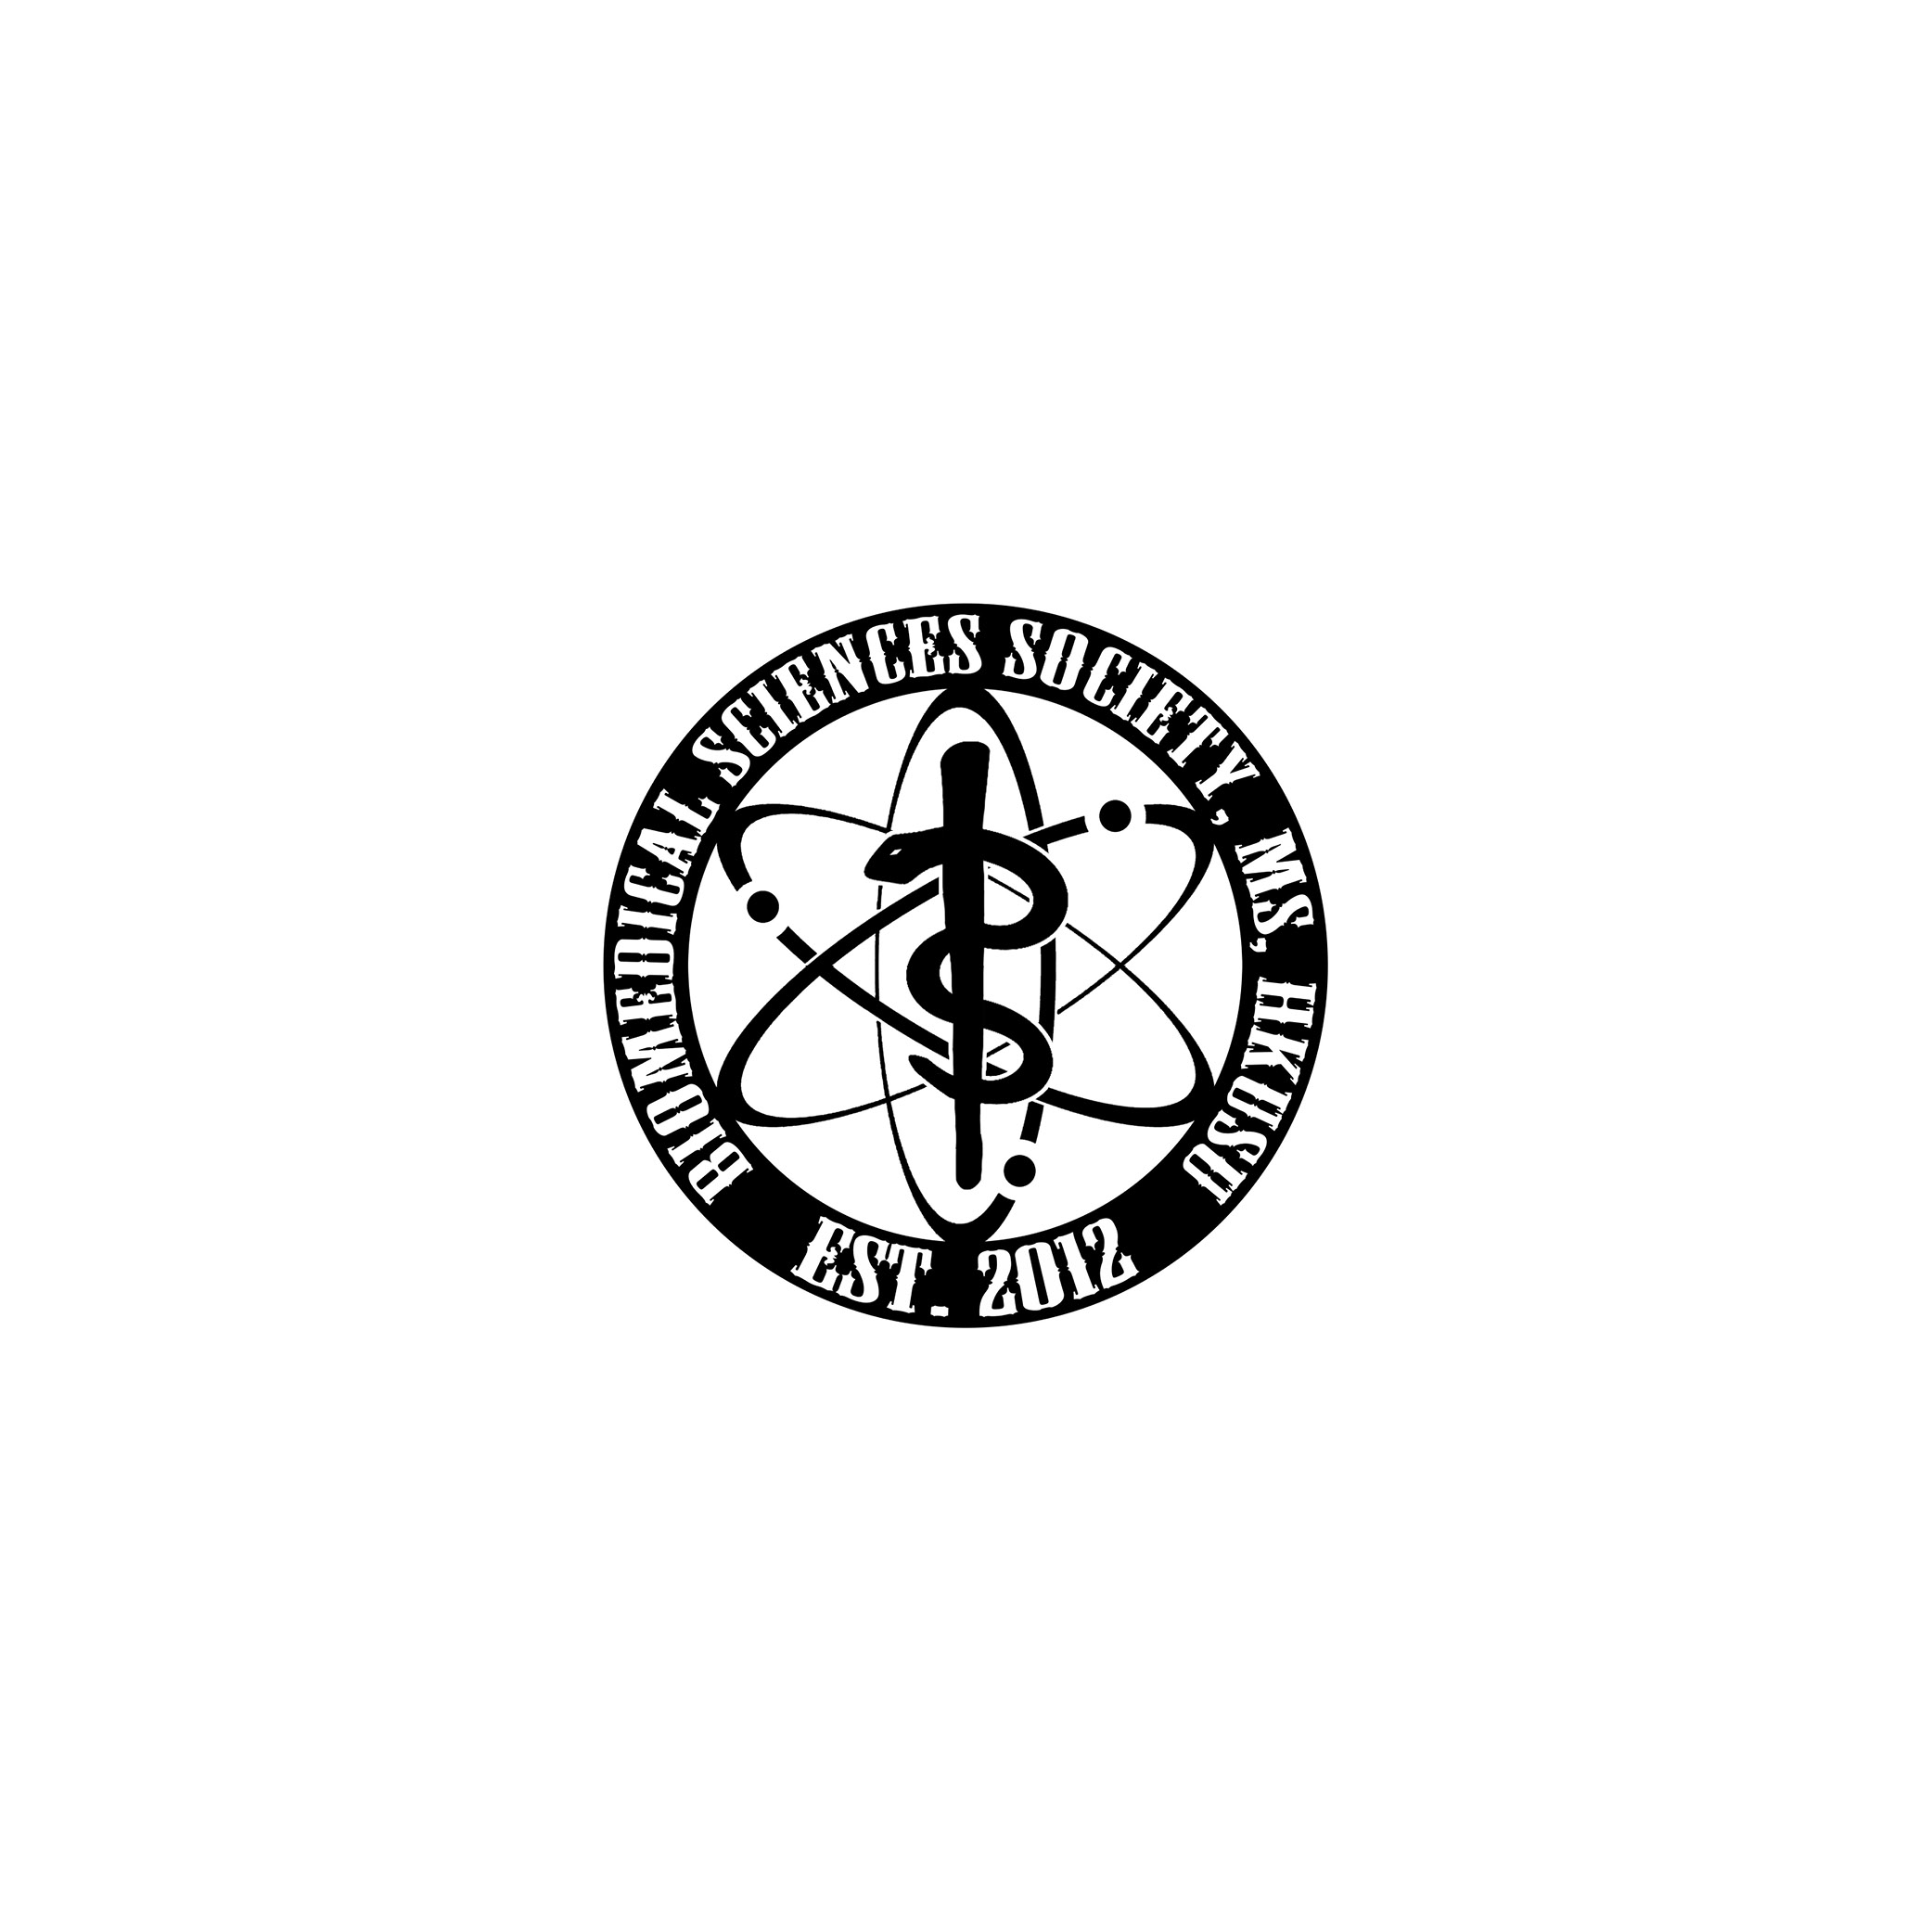 Logo of the Biomedical Sciences Society